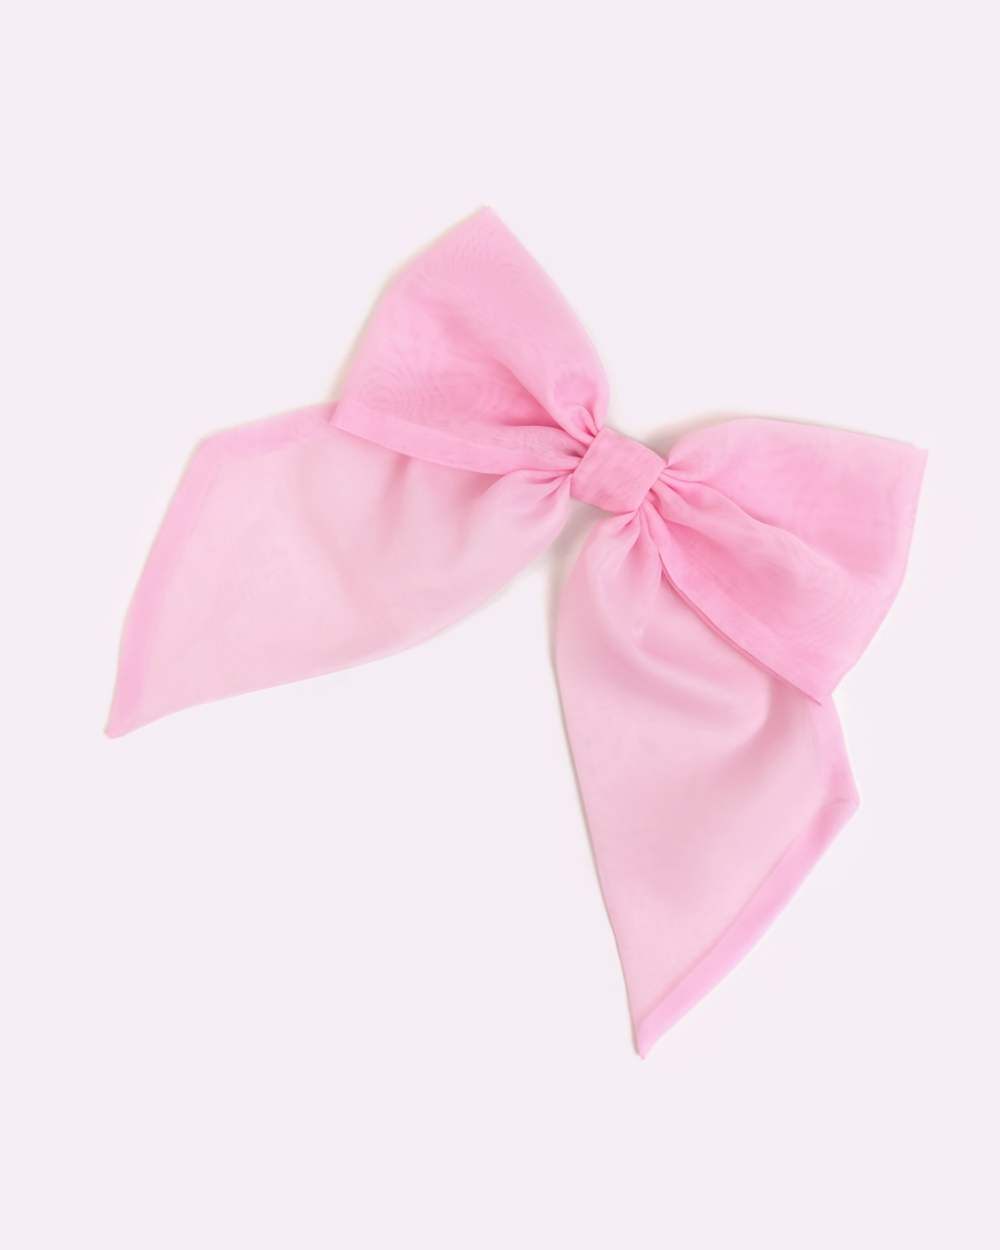 Wonder Bow - Pink